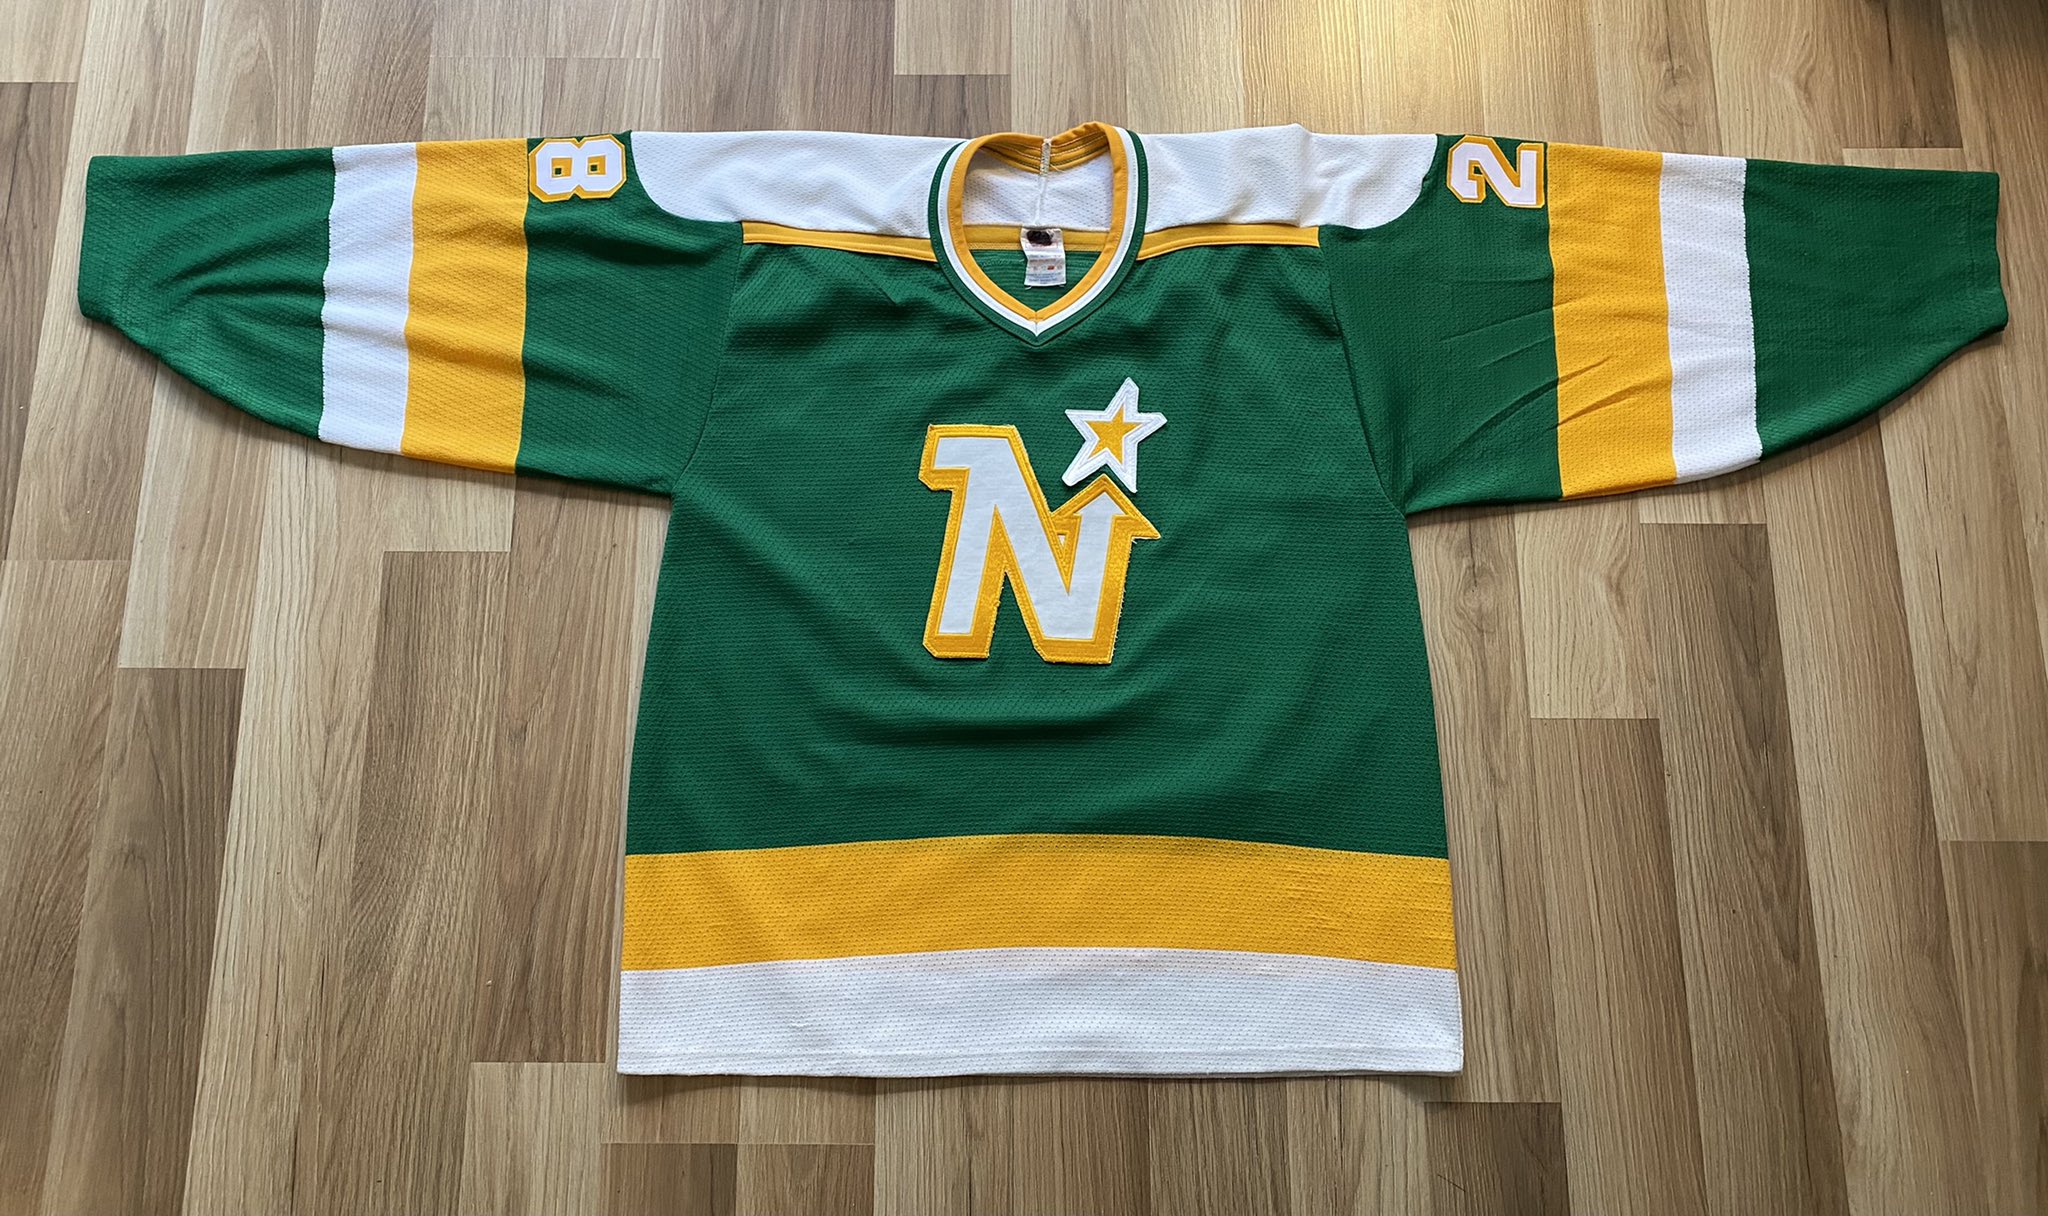 North Stars Jerseys (Green, Small)